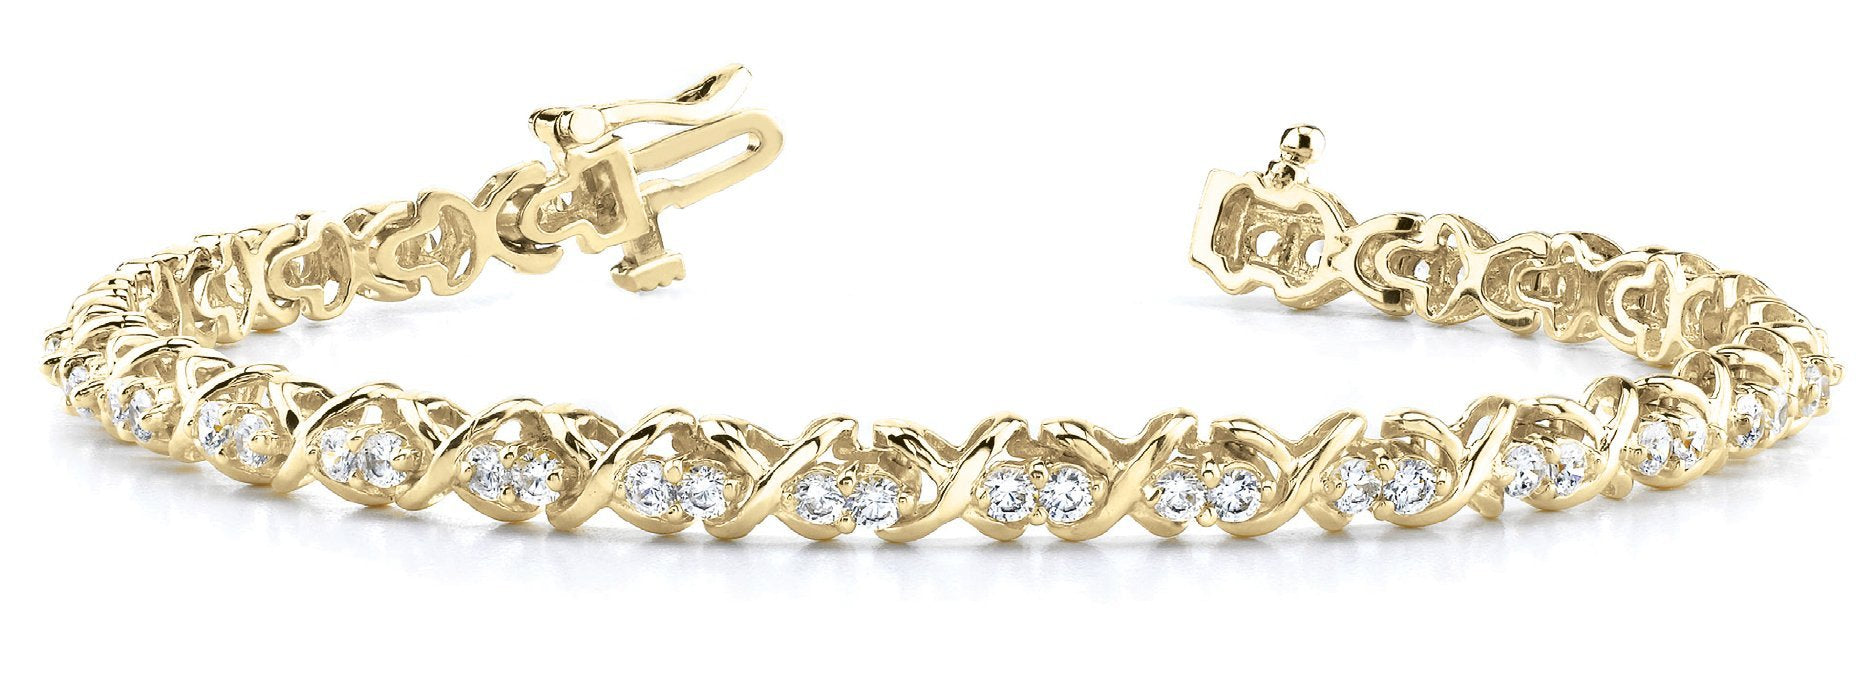 Fancy Diamond Bracelet Ladies 5.27ct tw - 14kt Gold